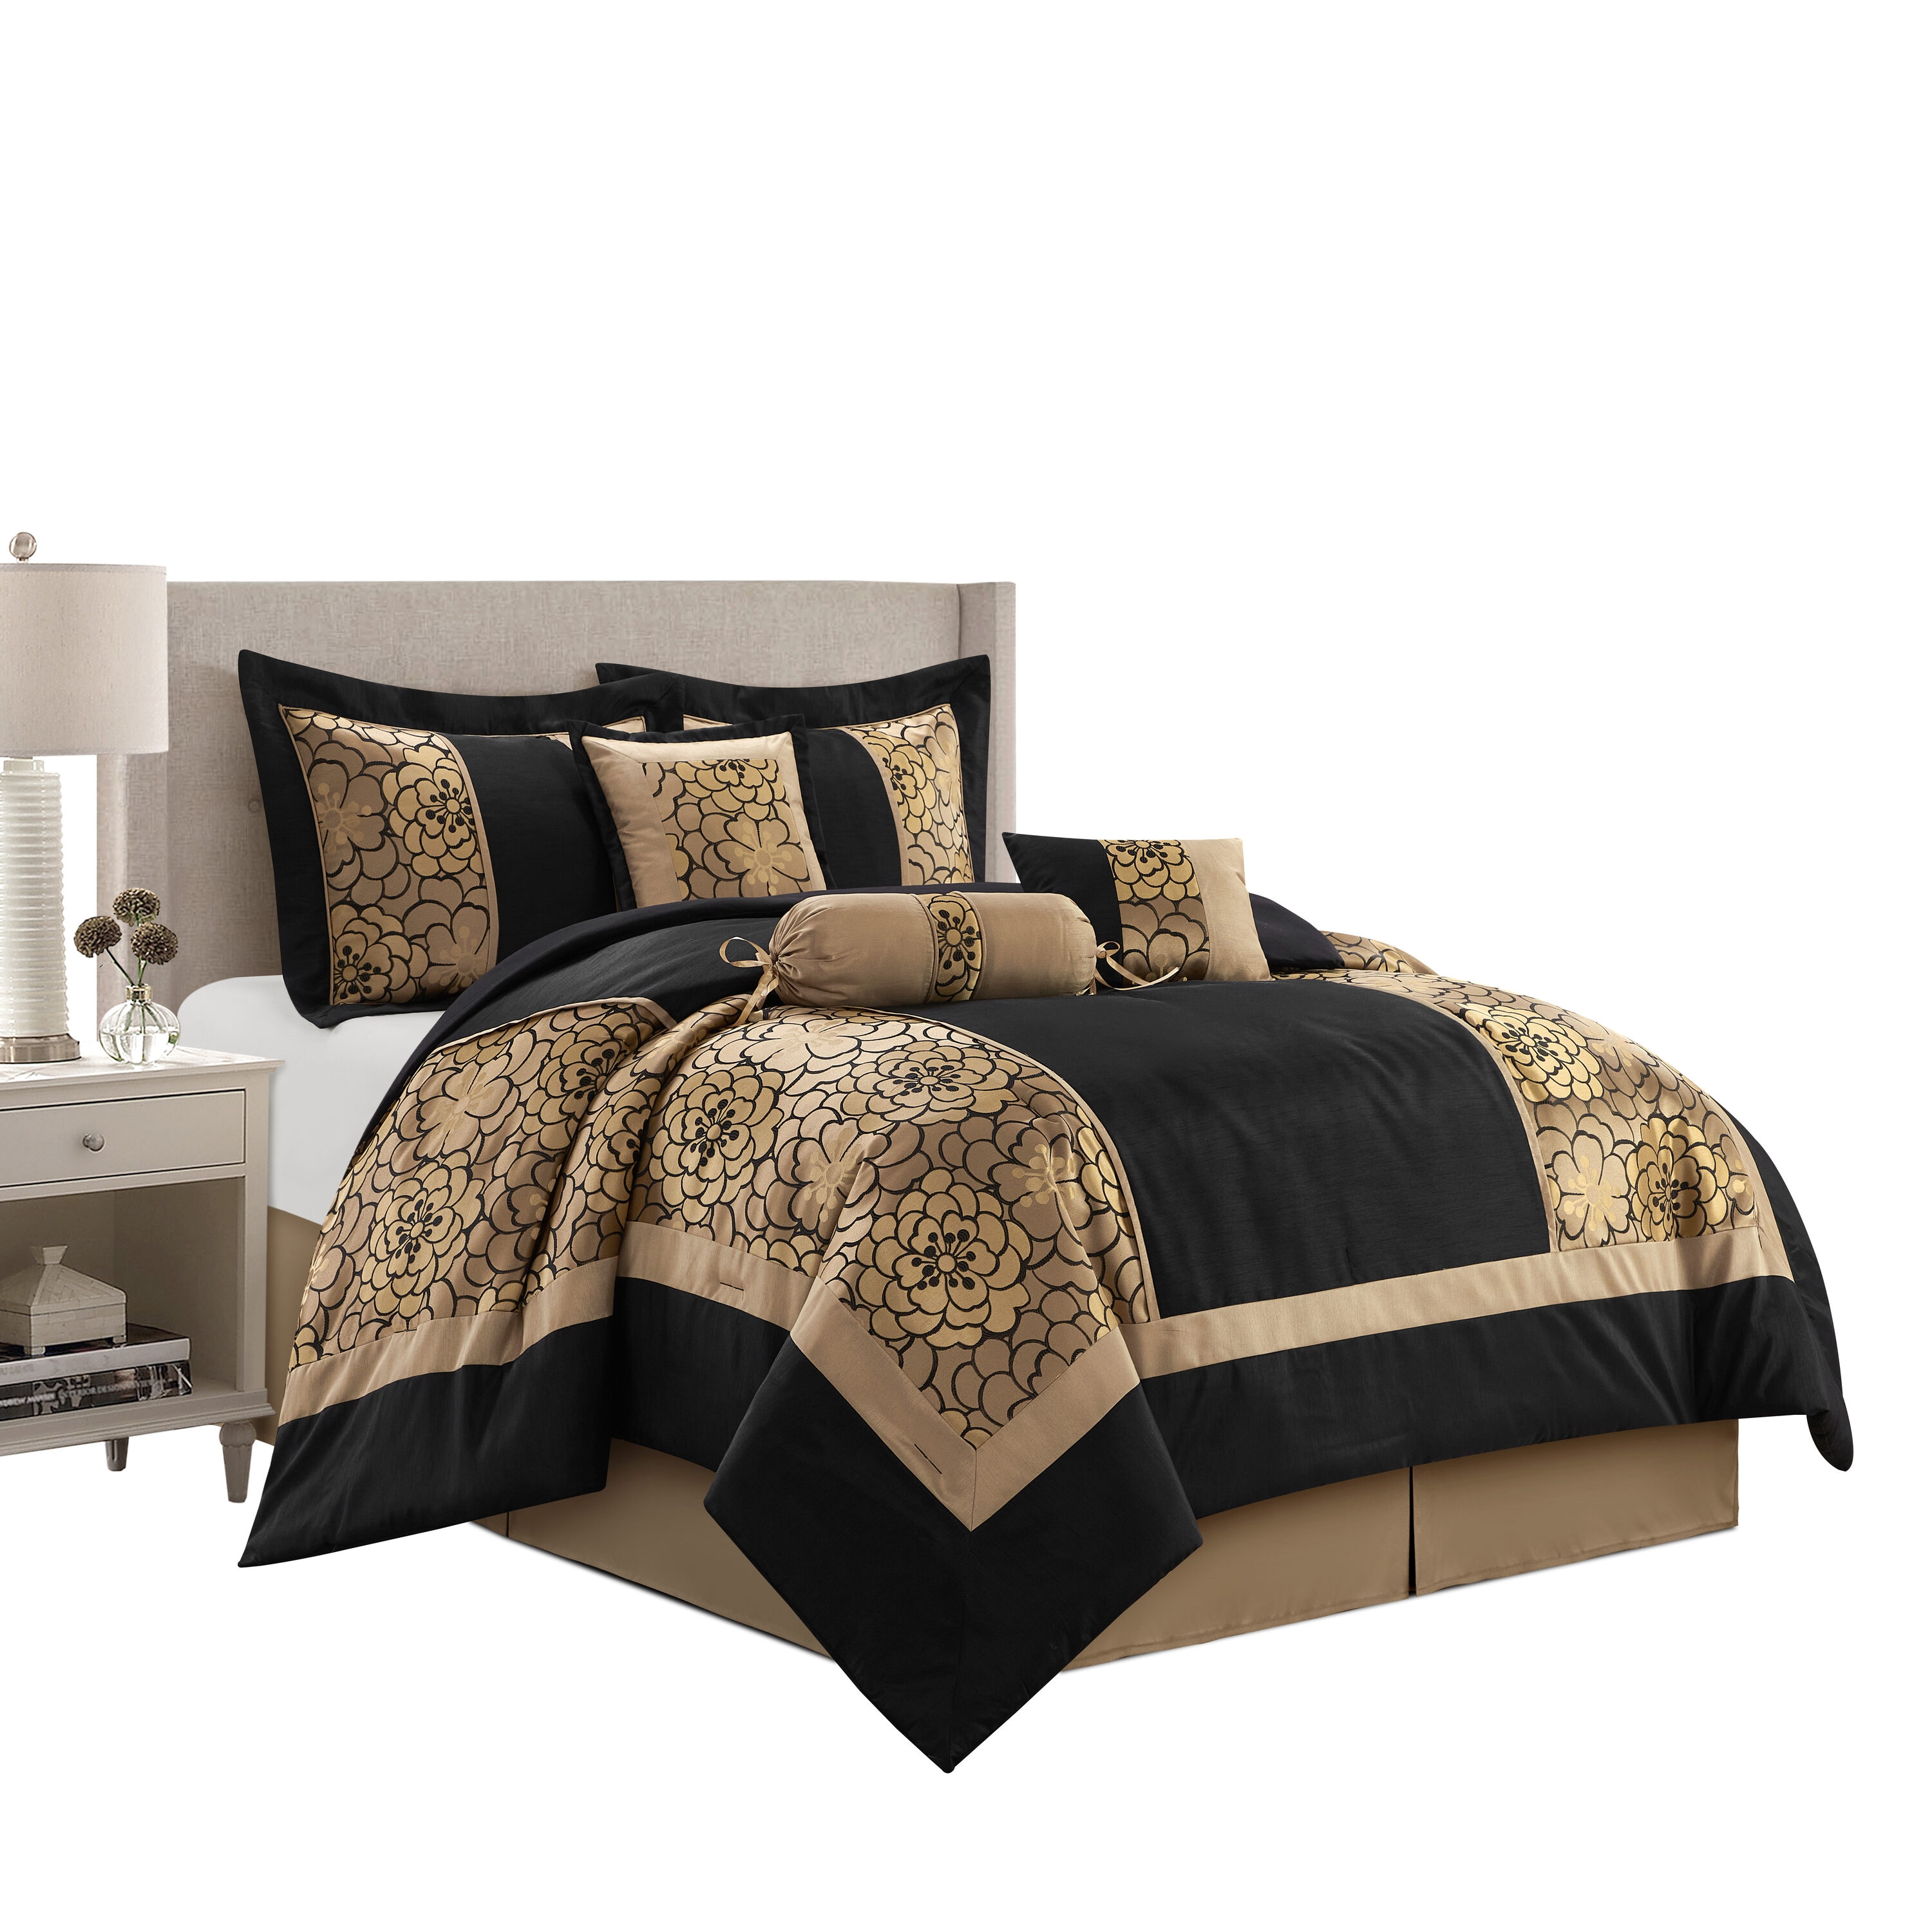 Grand Avenue Sibyl 7-Piece Black/Gold Queen Comforter Set in the